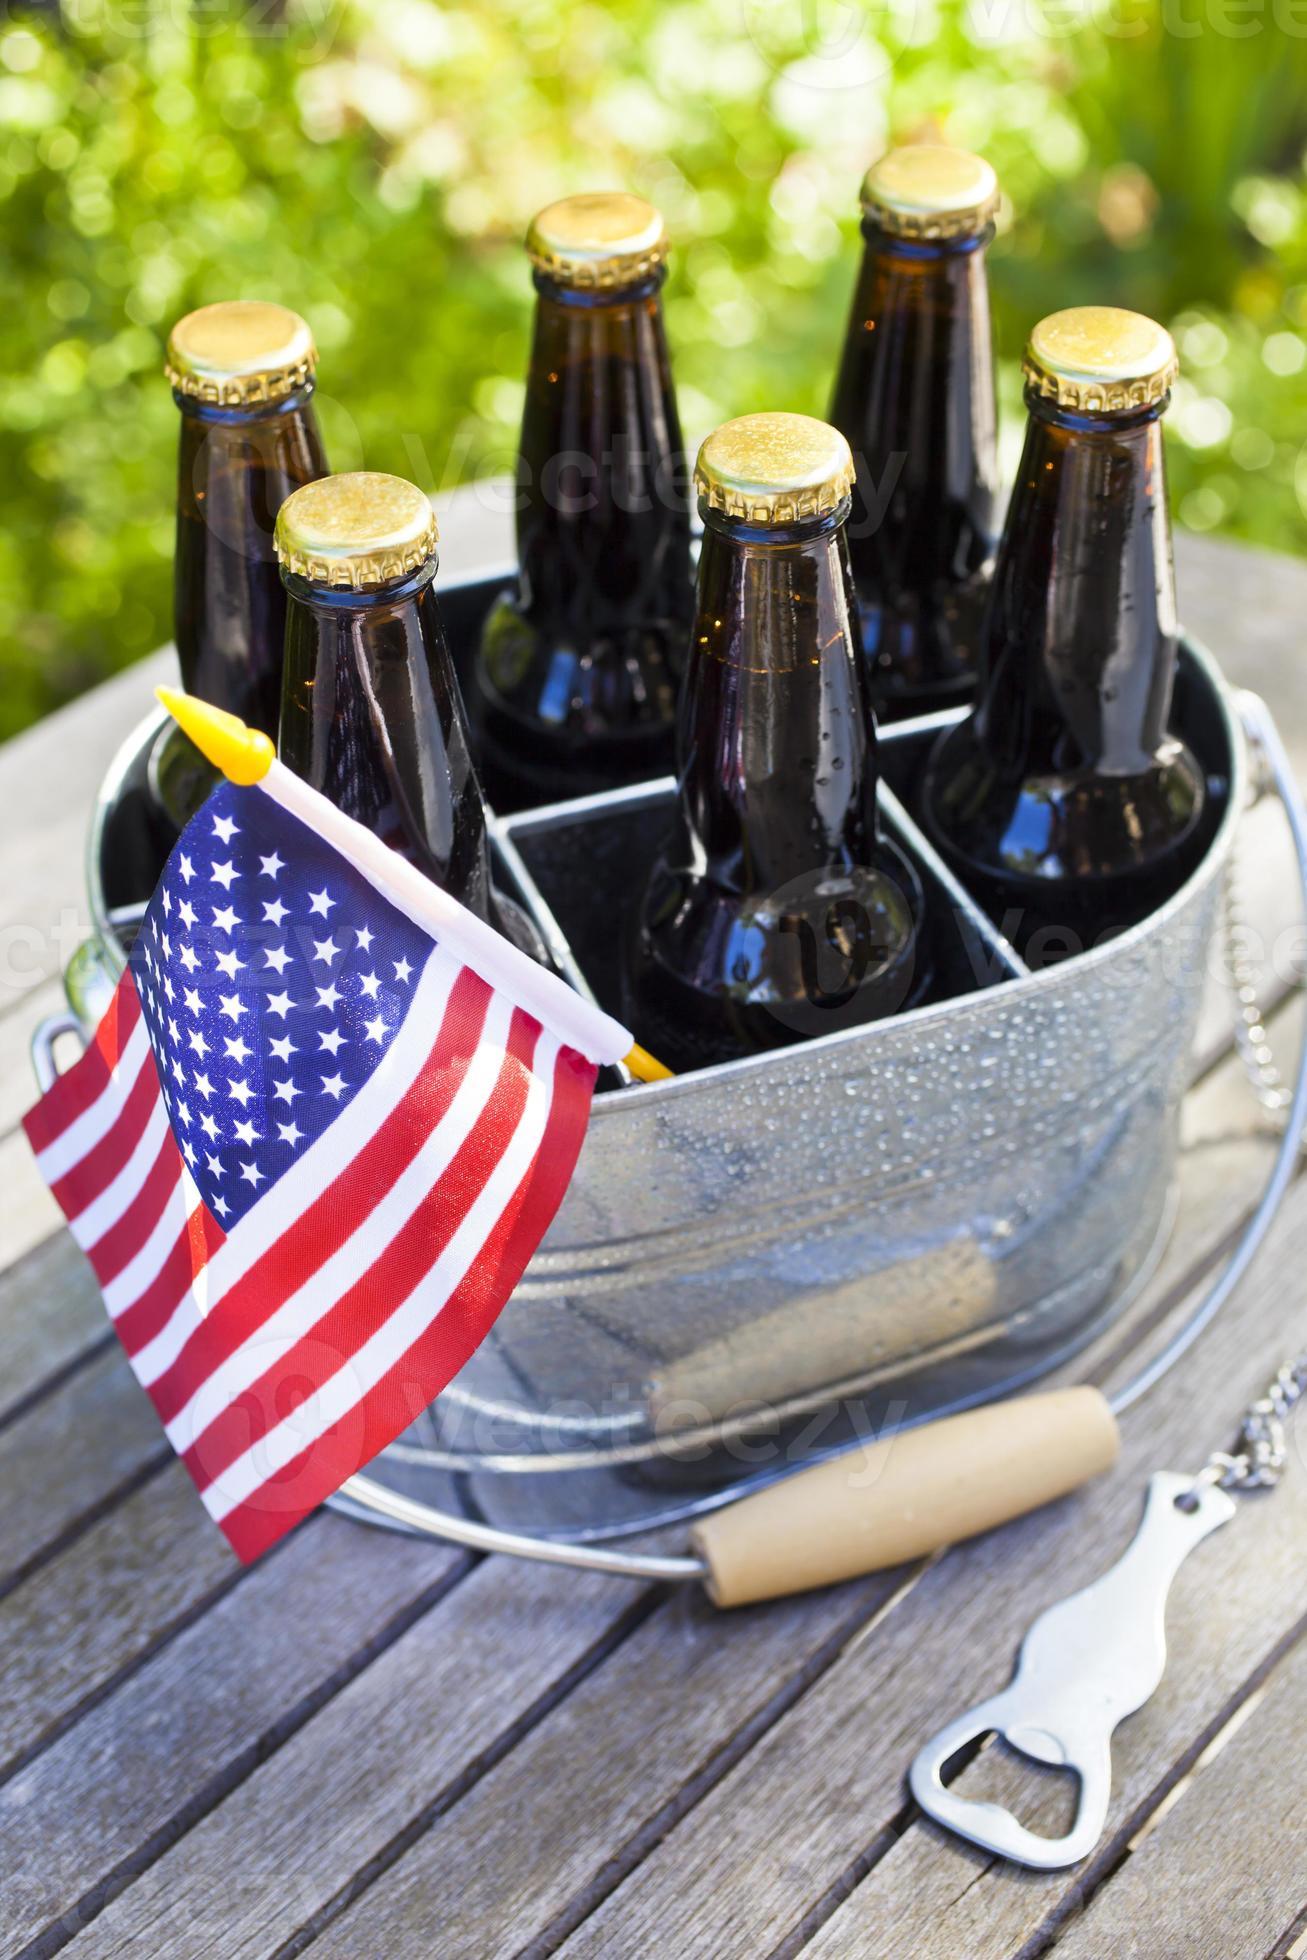 visie filosoof Encommium bier en Amerikaanse vlaggen. 1359188 Stockfoto